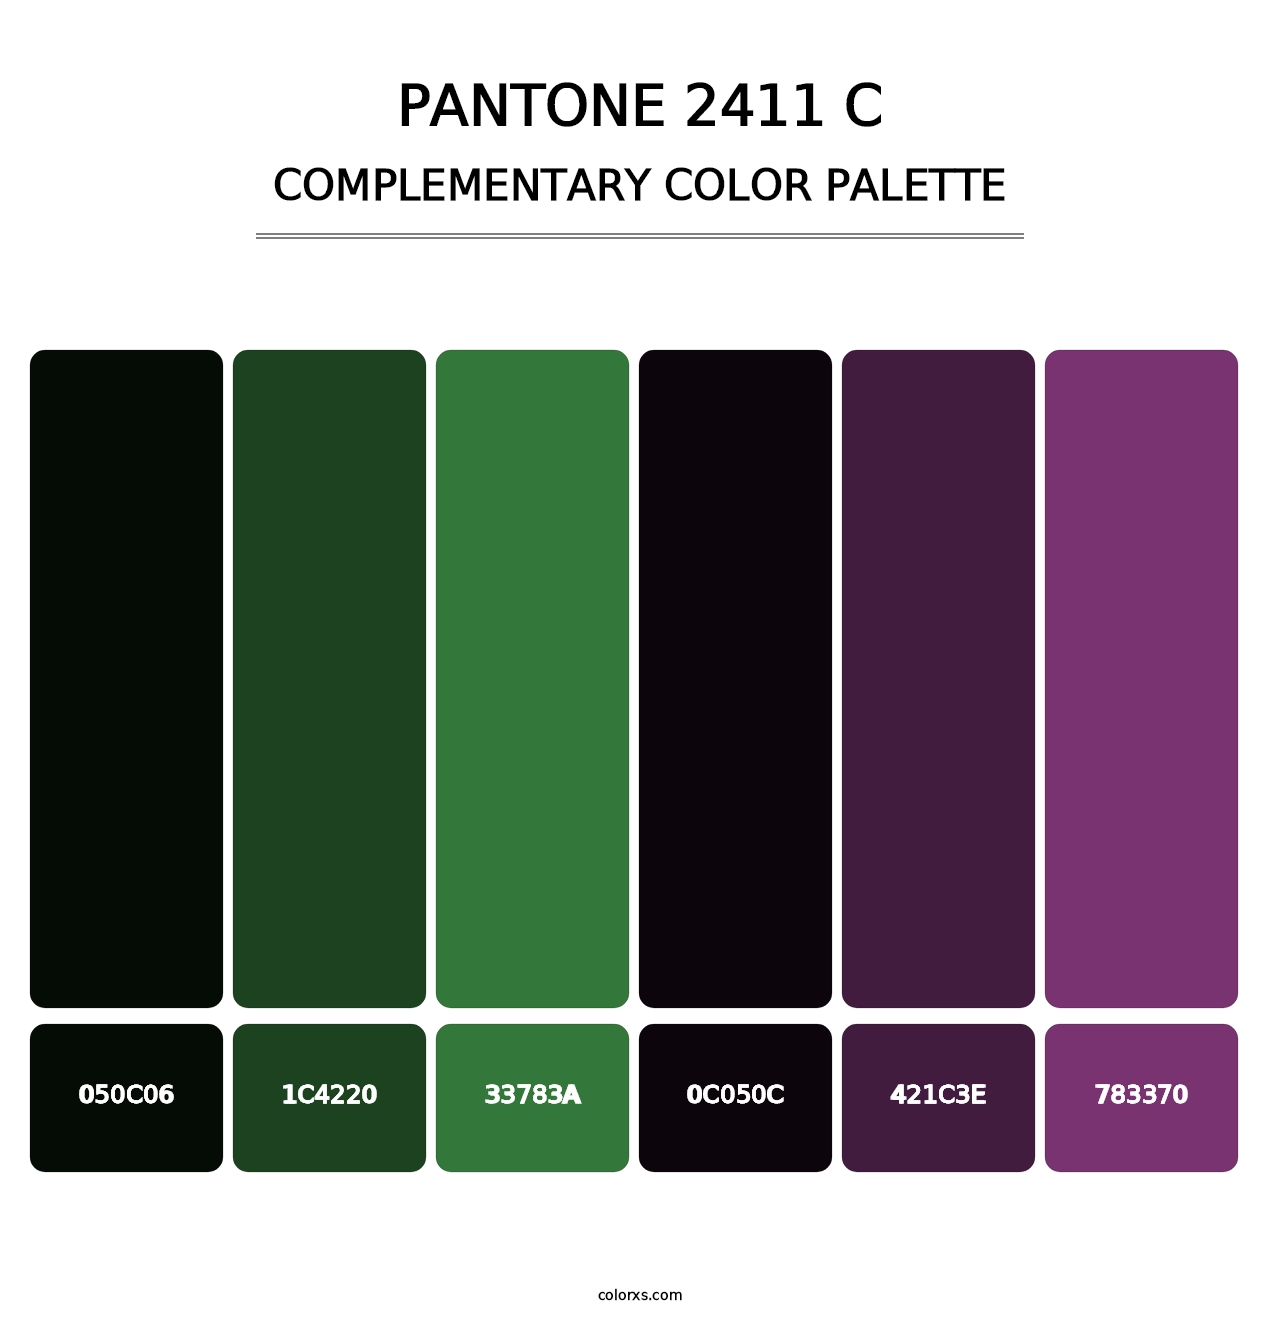 PANTONE 2411 C - Complementary Color Palette